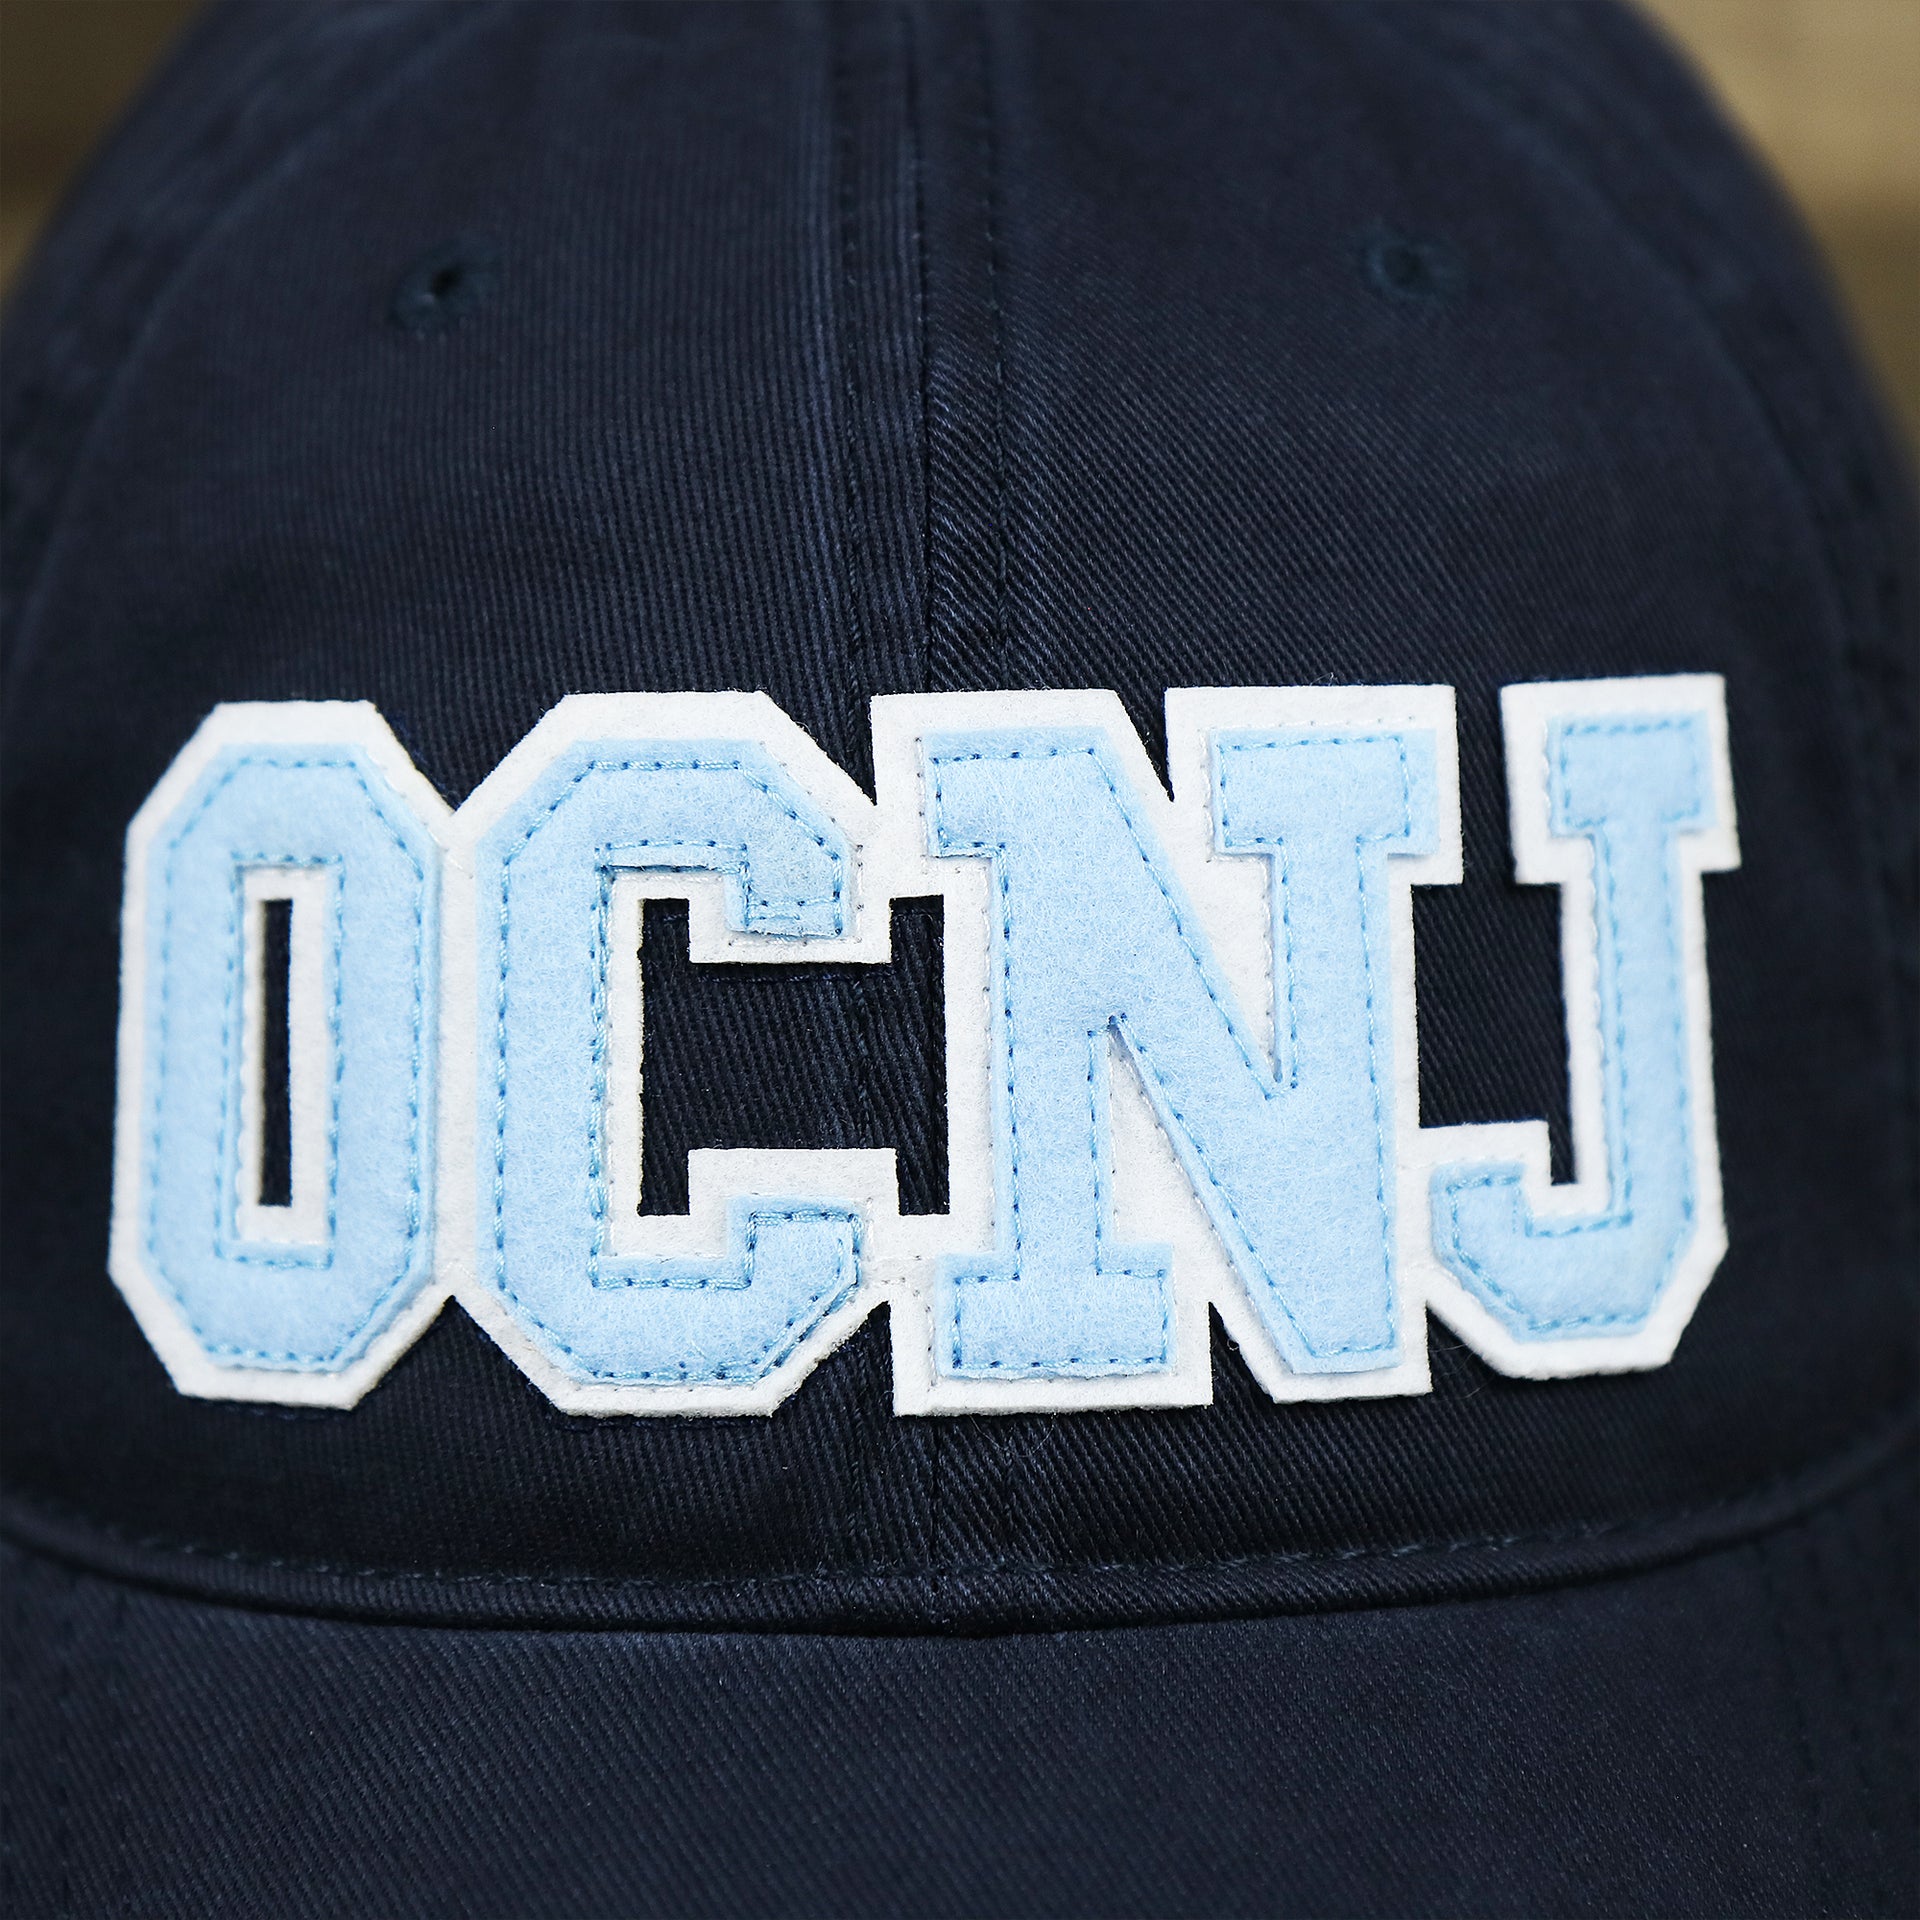 The OCNJ Wordmark on the Youth Light Blue OCNJ Wordmark White Outline Dad Hat | Youth Navy Blue Dad Hat